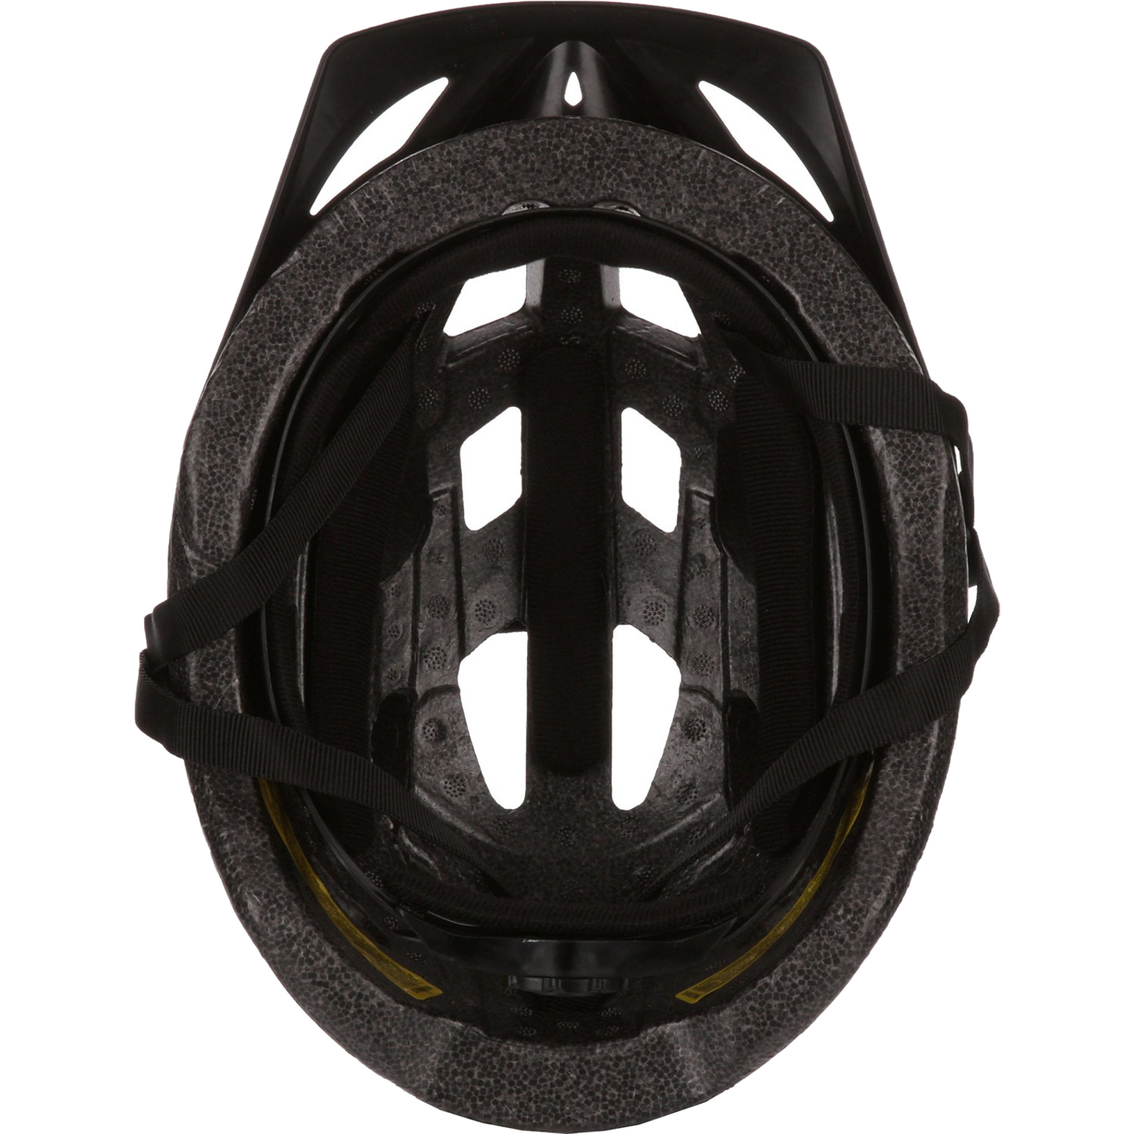 Schwinn Beam Reflective Lighted Adult Helmet - Image 3 of 3